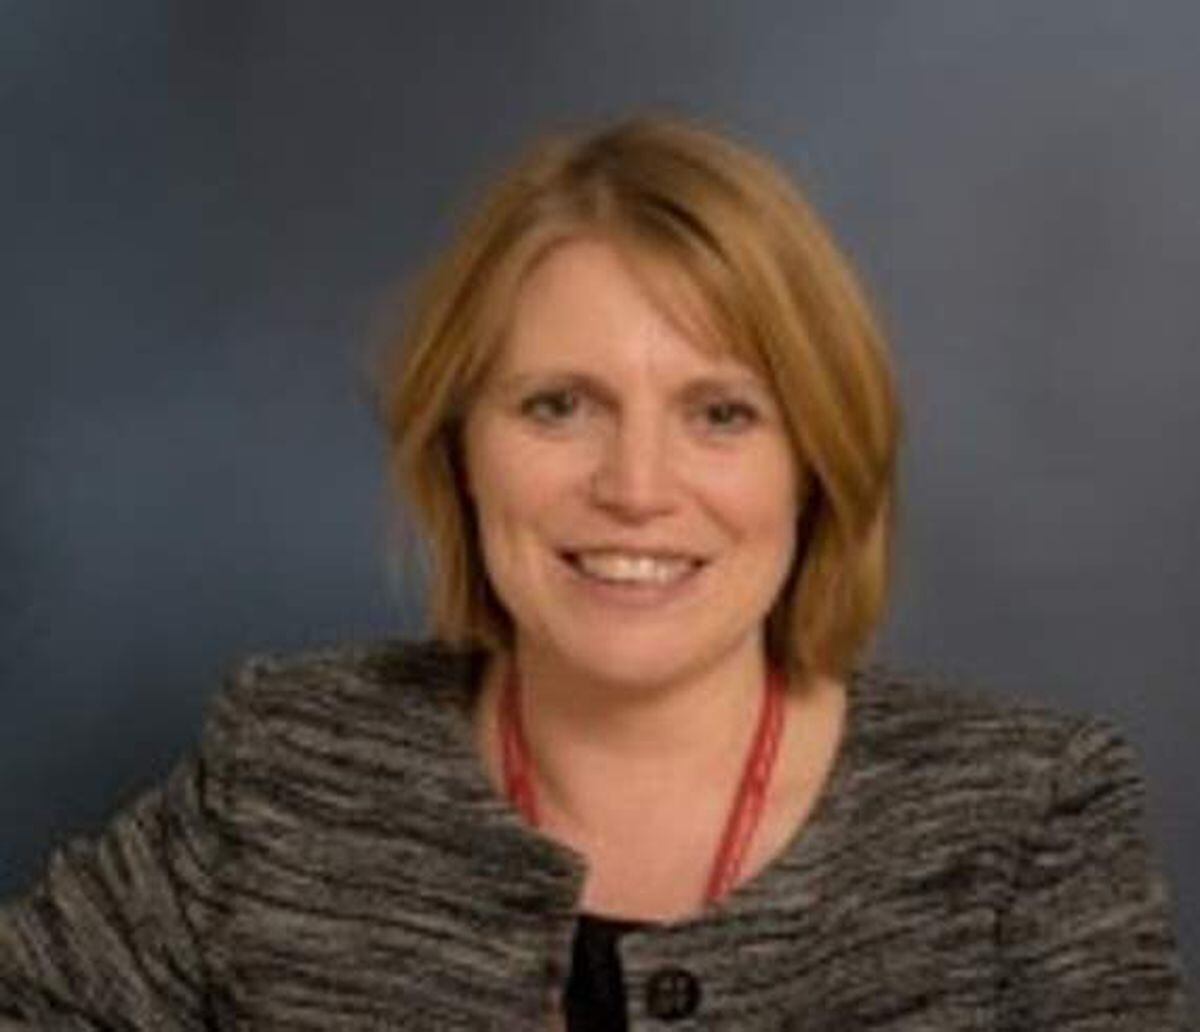 The chief executive of Powys Teaching Health Board, Carol Shillabeer 